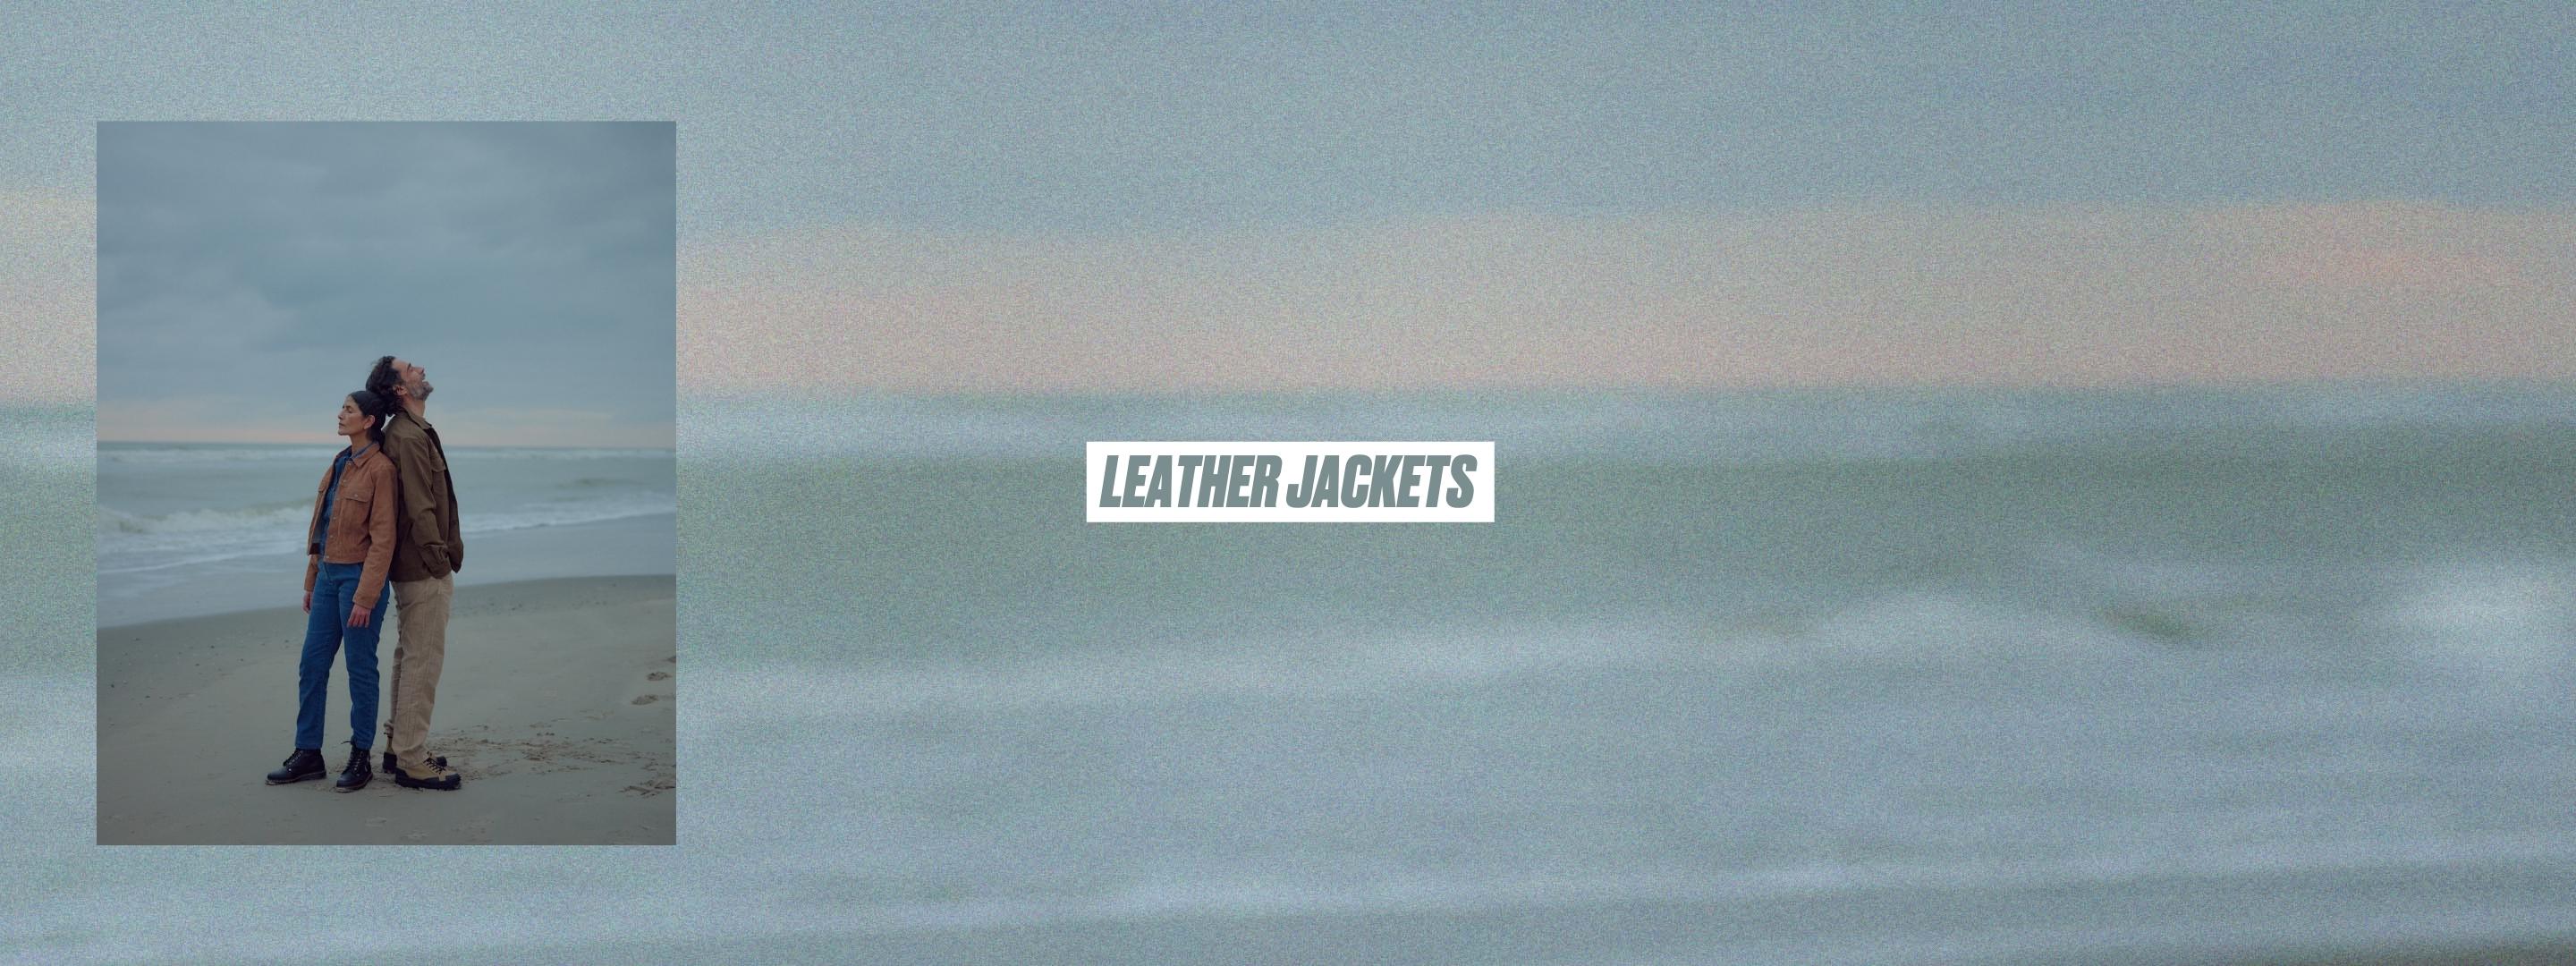 Teddys & Leather jackets